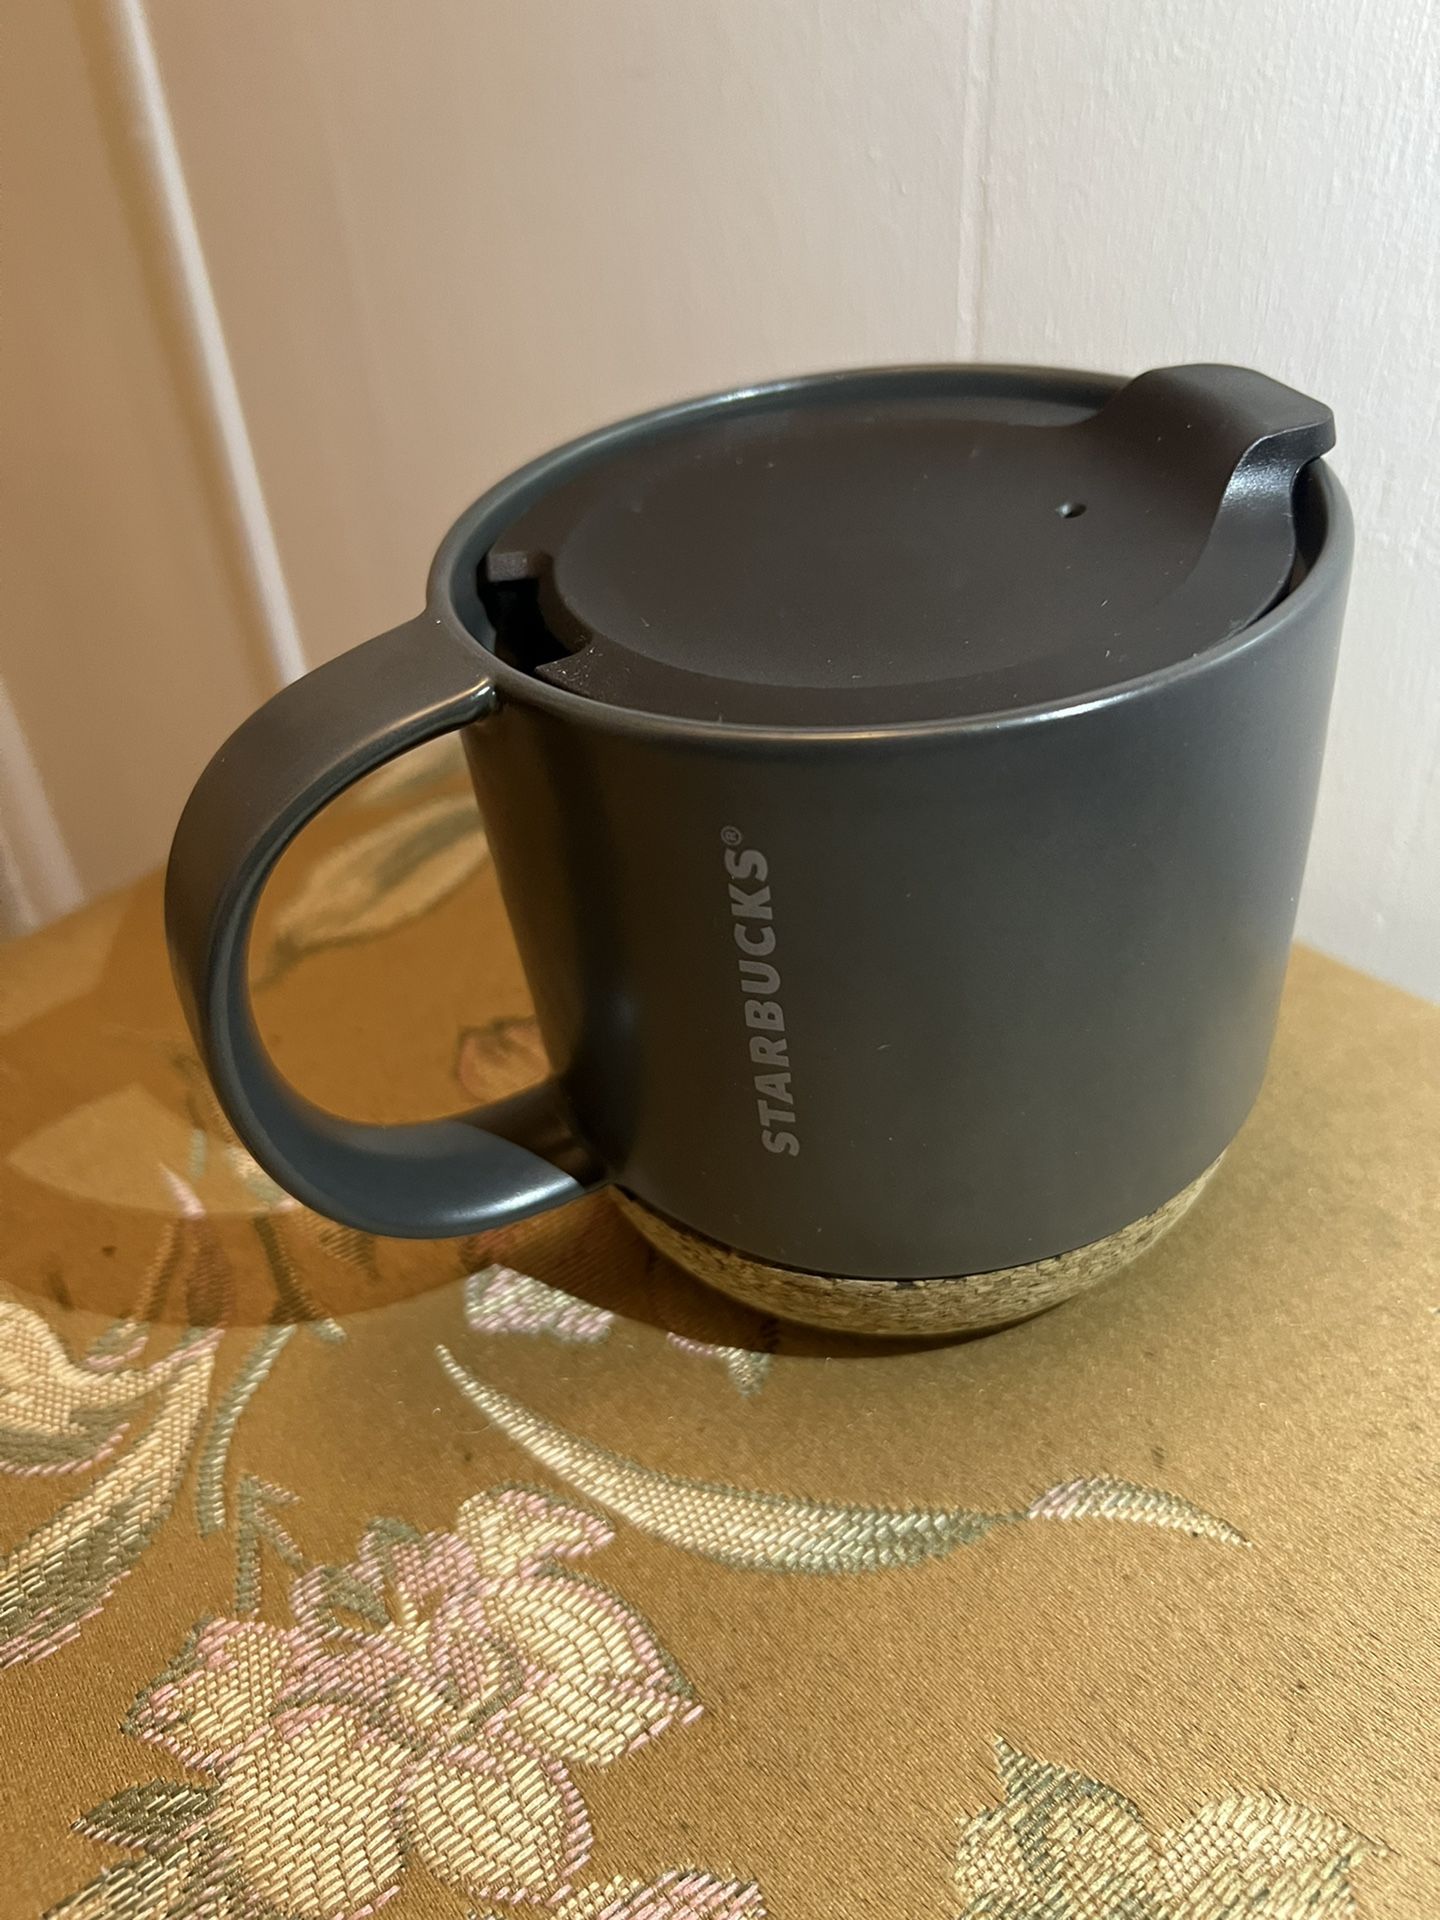  Starbucks Mug   uSize: 12 fl oz, 355 ml Great for a cup 